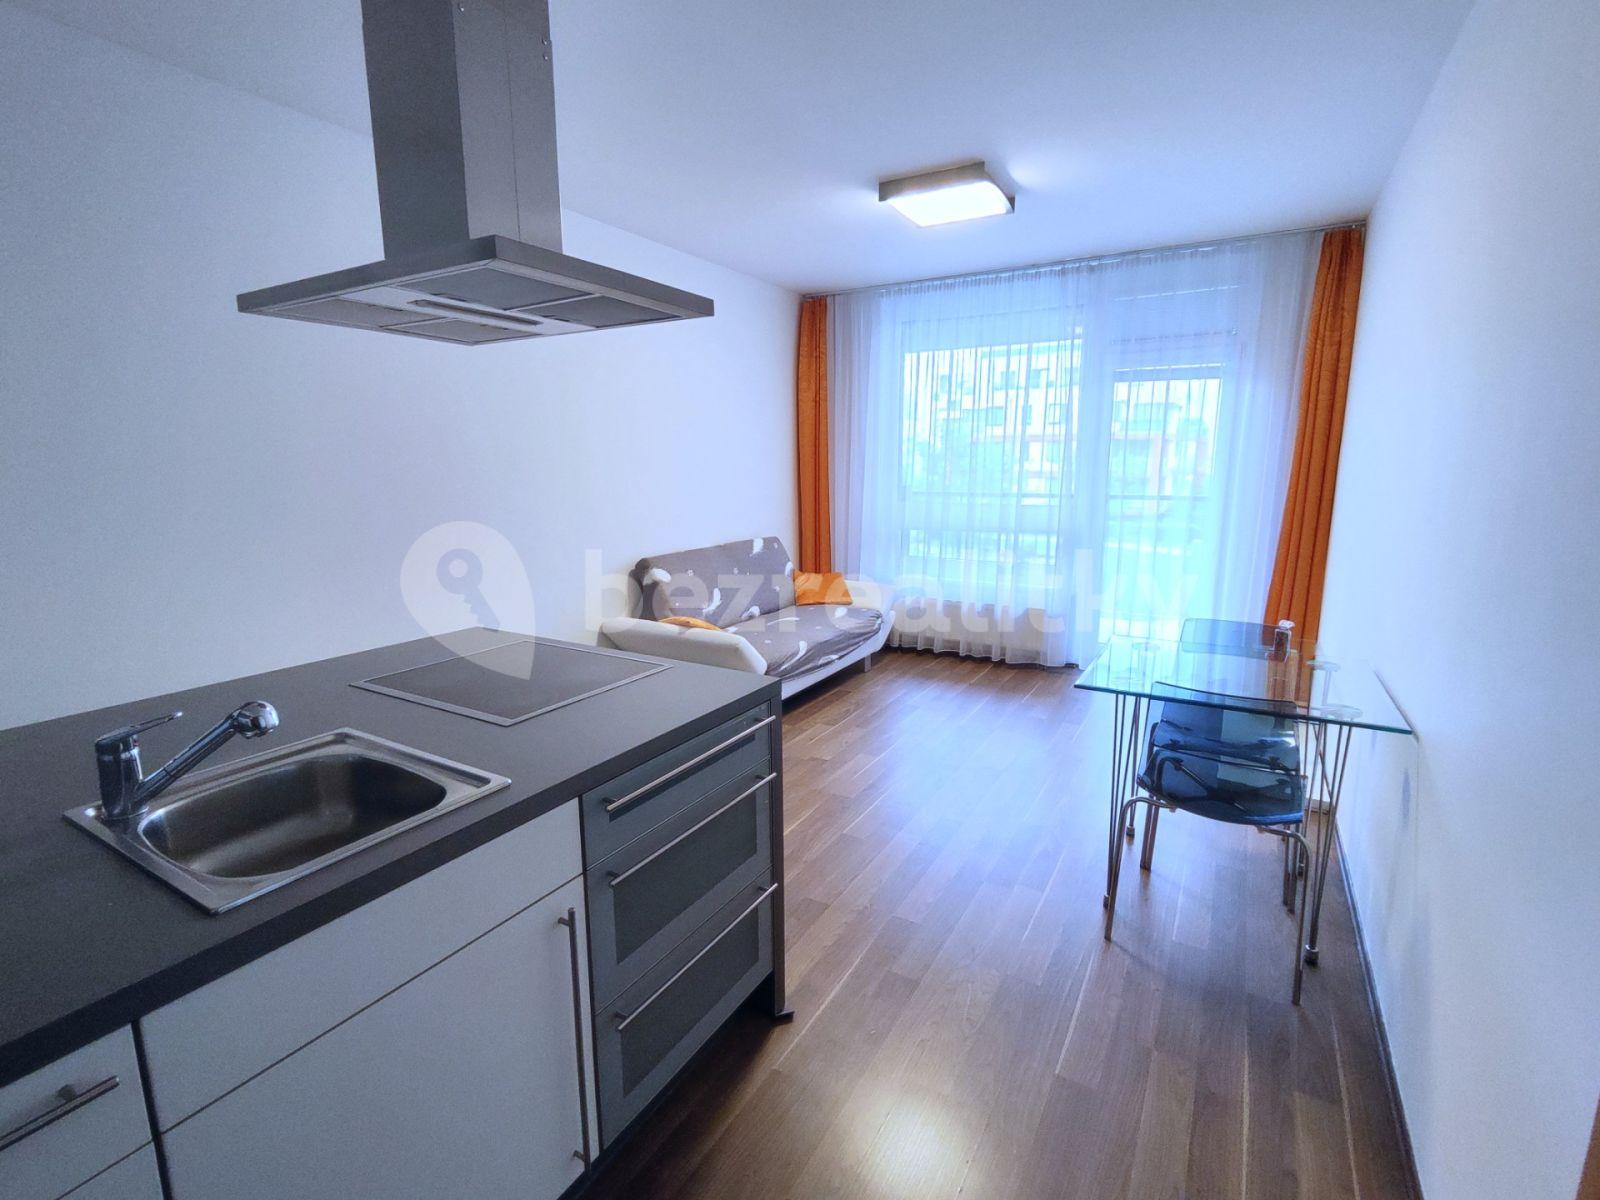 1 bedroom with open-plan kitchen flat for sale, 59 m², Svitákova, Prague, Prague